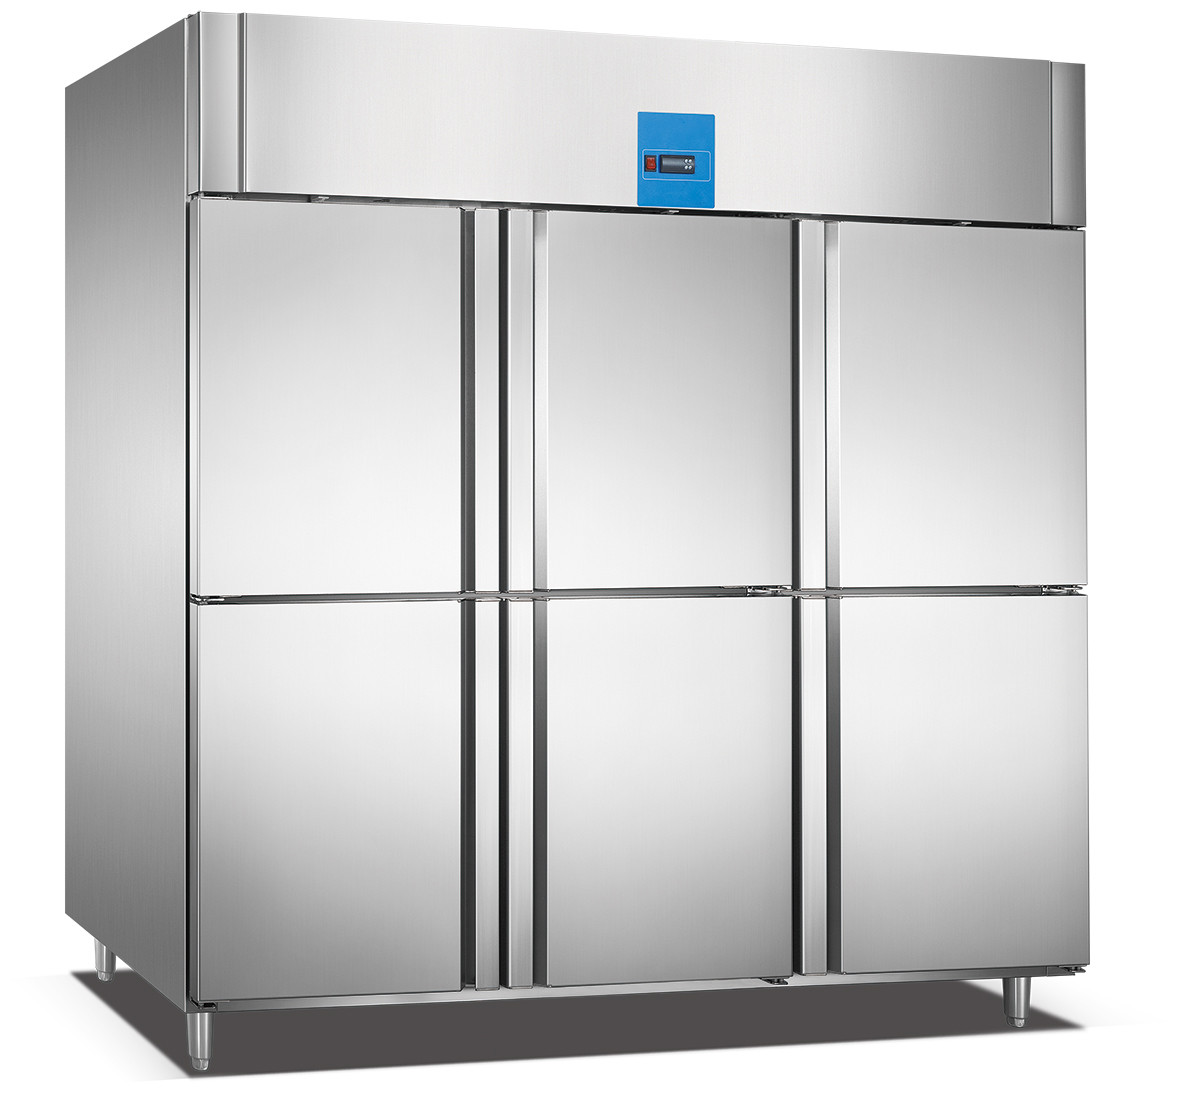 Bradford commercial Refrigeration холодильник